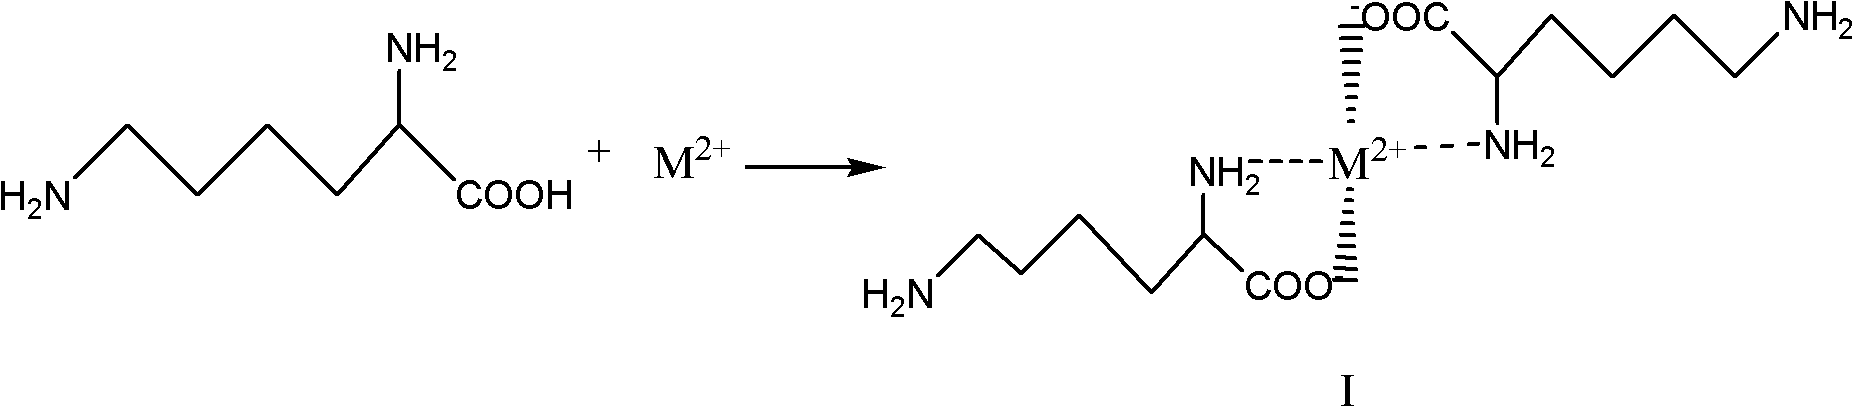 Preparation method of epsilon-N-lauroyl lysine